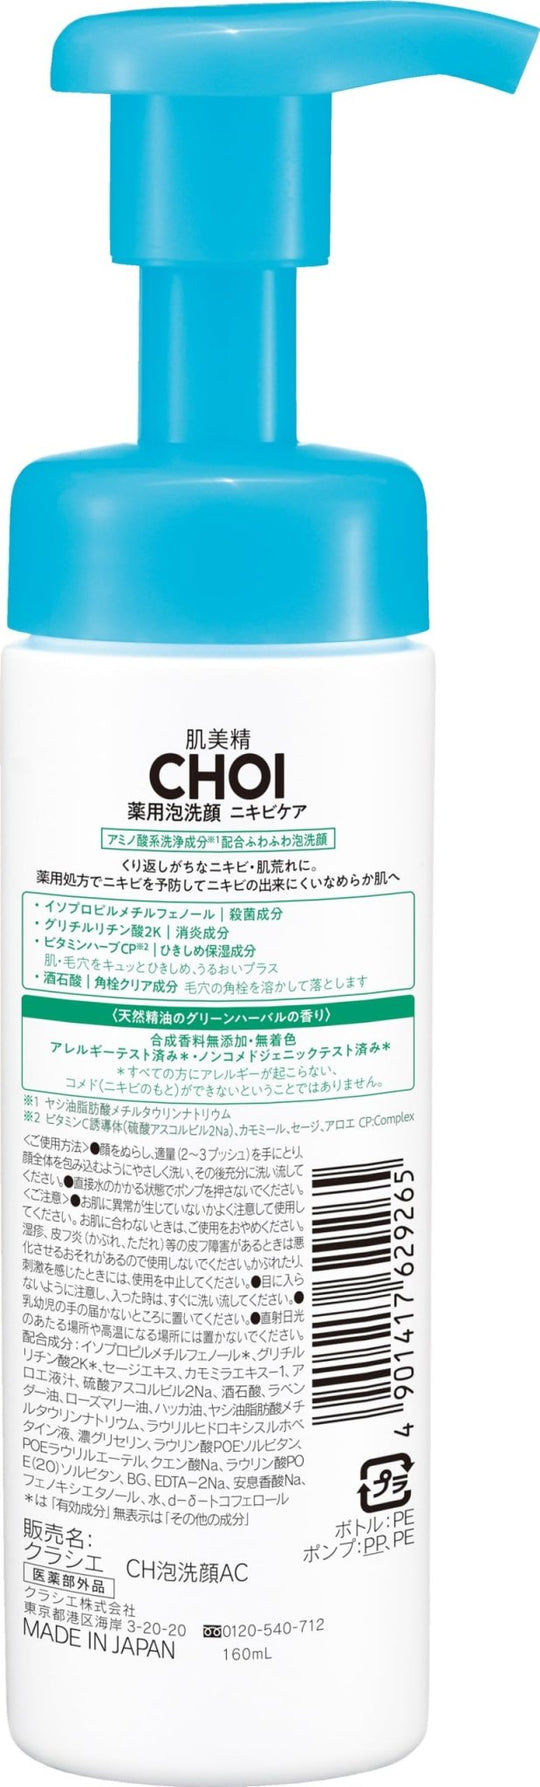 CHOI Face Wash Foam Medicinal Acne Care 110g - WAFUU JAPAN